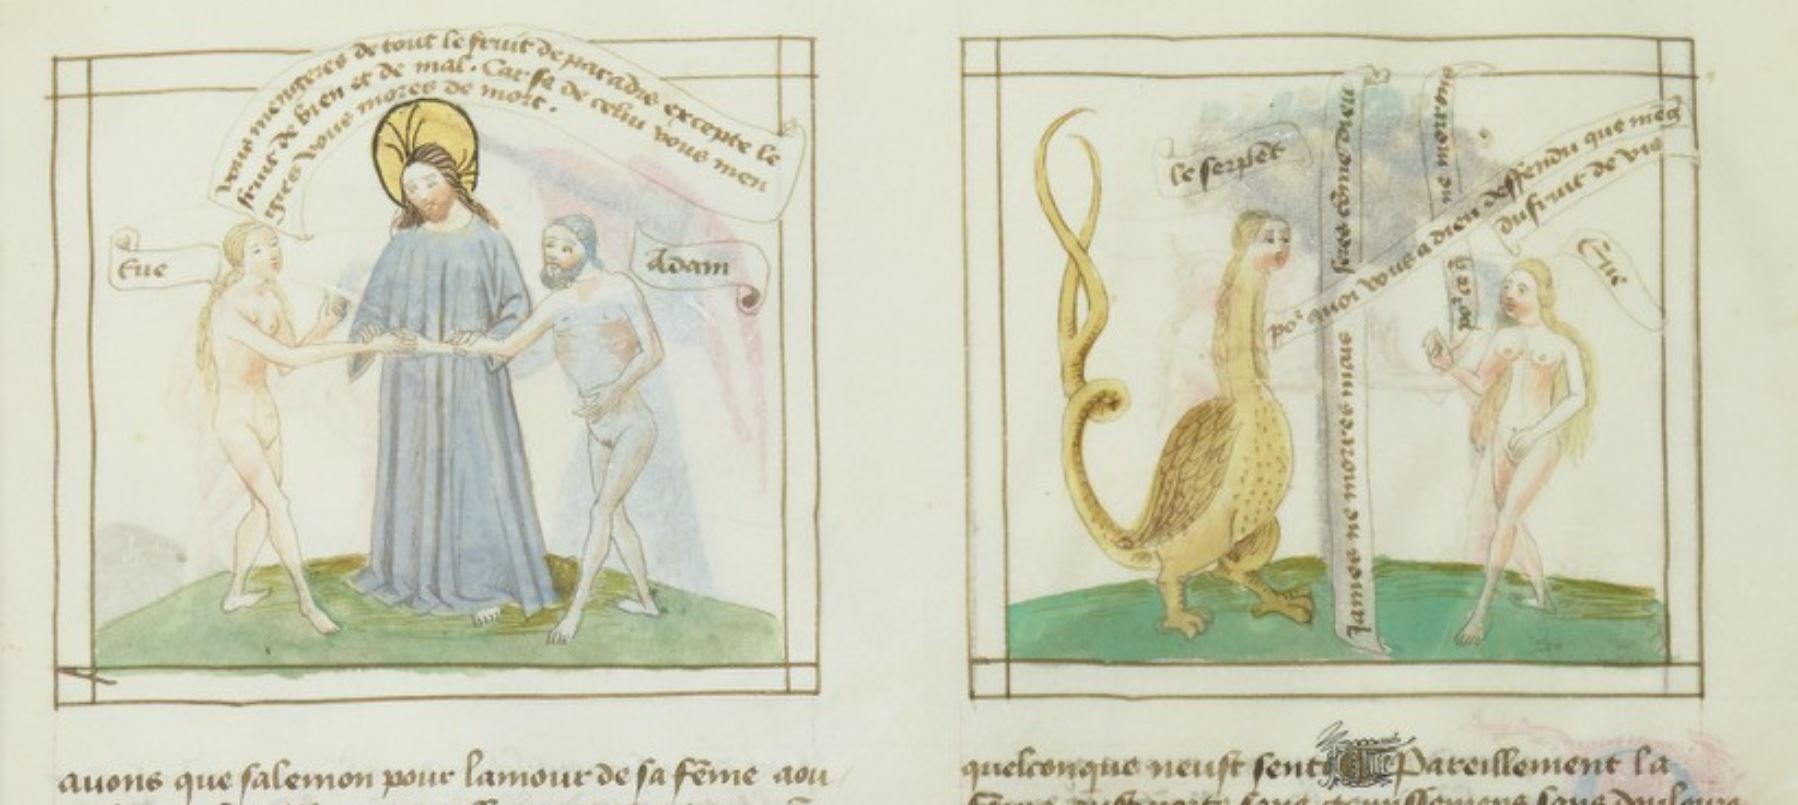 Mariage Adam et Eve Speculum Humanae Salvationis France vers 1450 BNF Fr 188 fol 6r